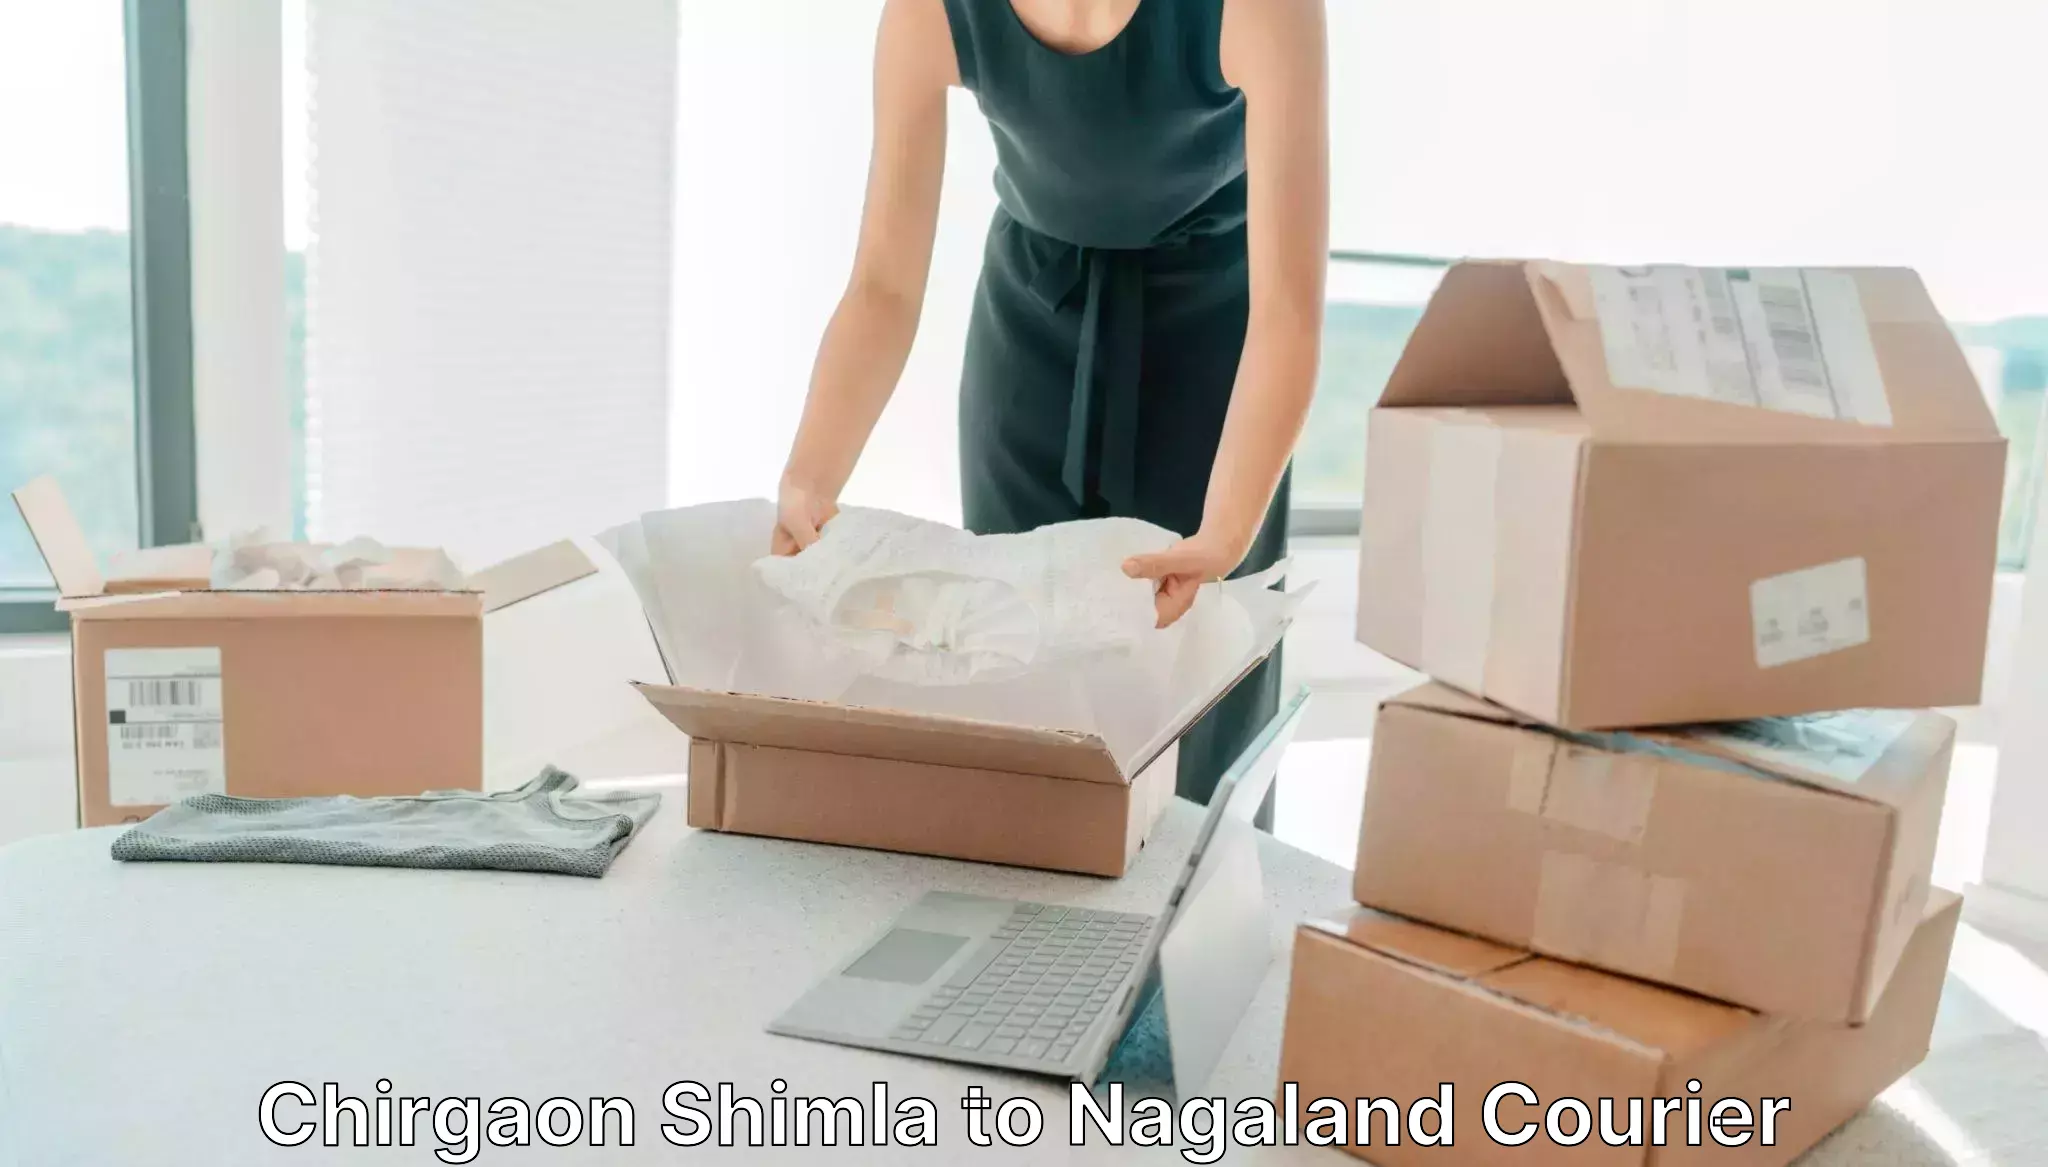 Affordable parcel service Chirgaon Shimla to Nagaland